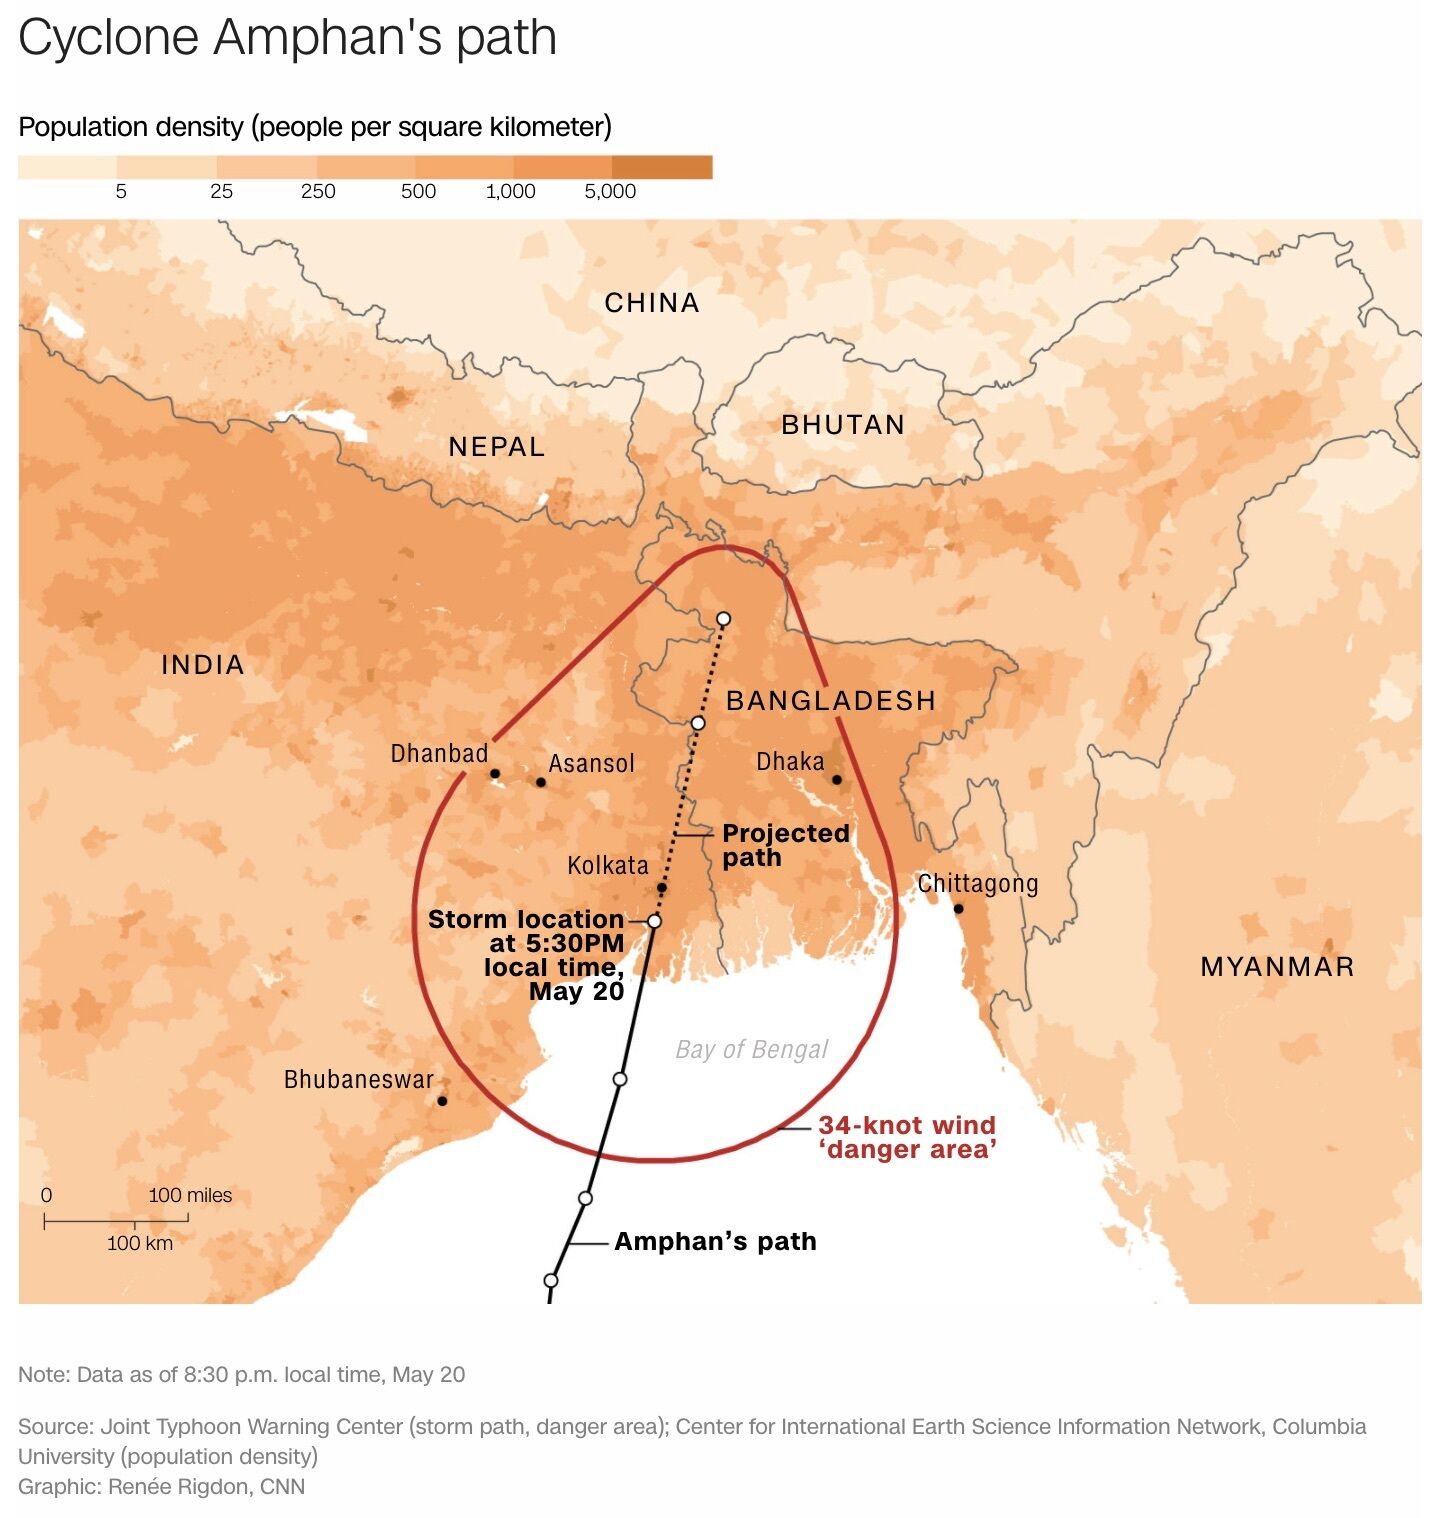 Циклон "Амфан" в Индии и Бангладеш